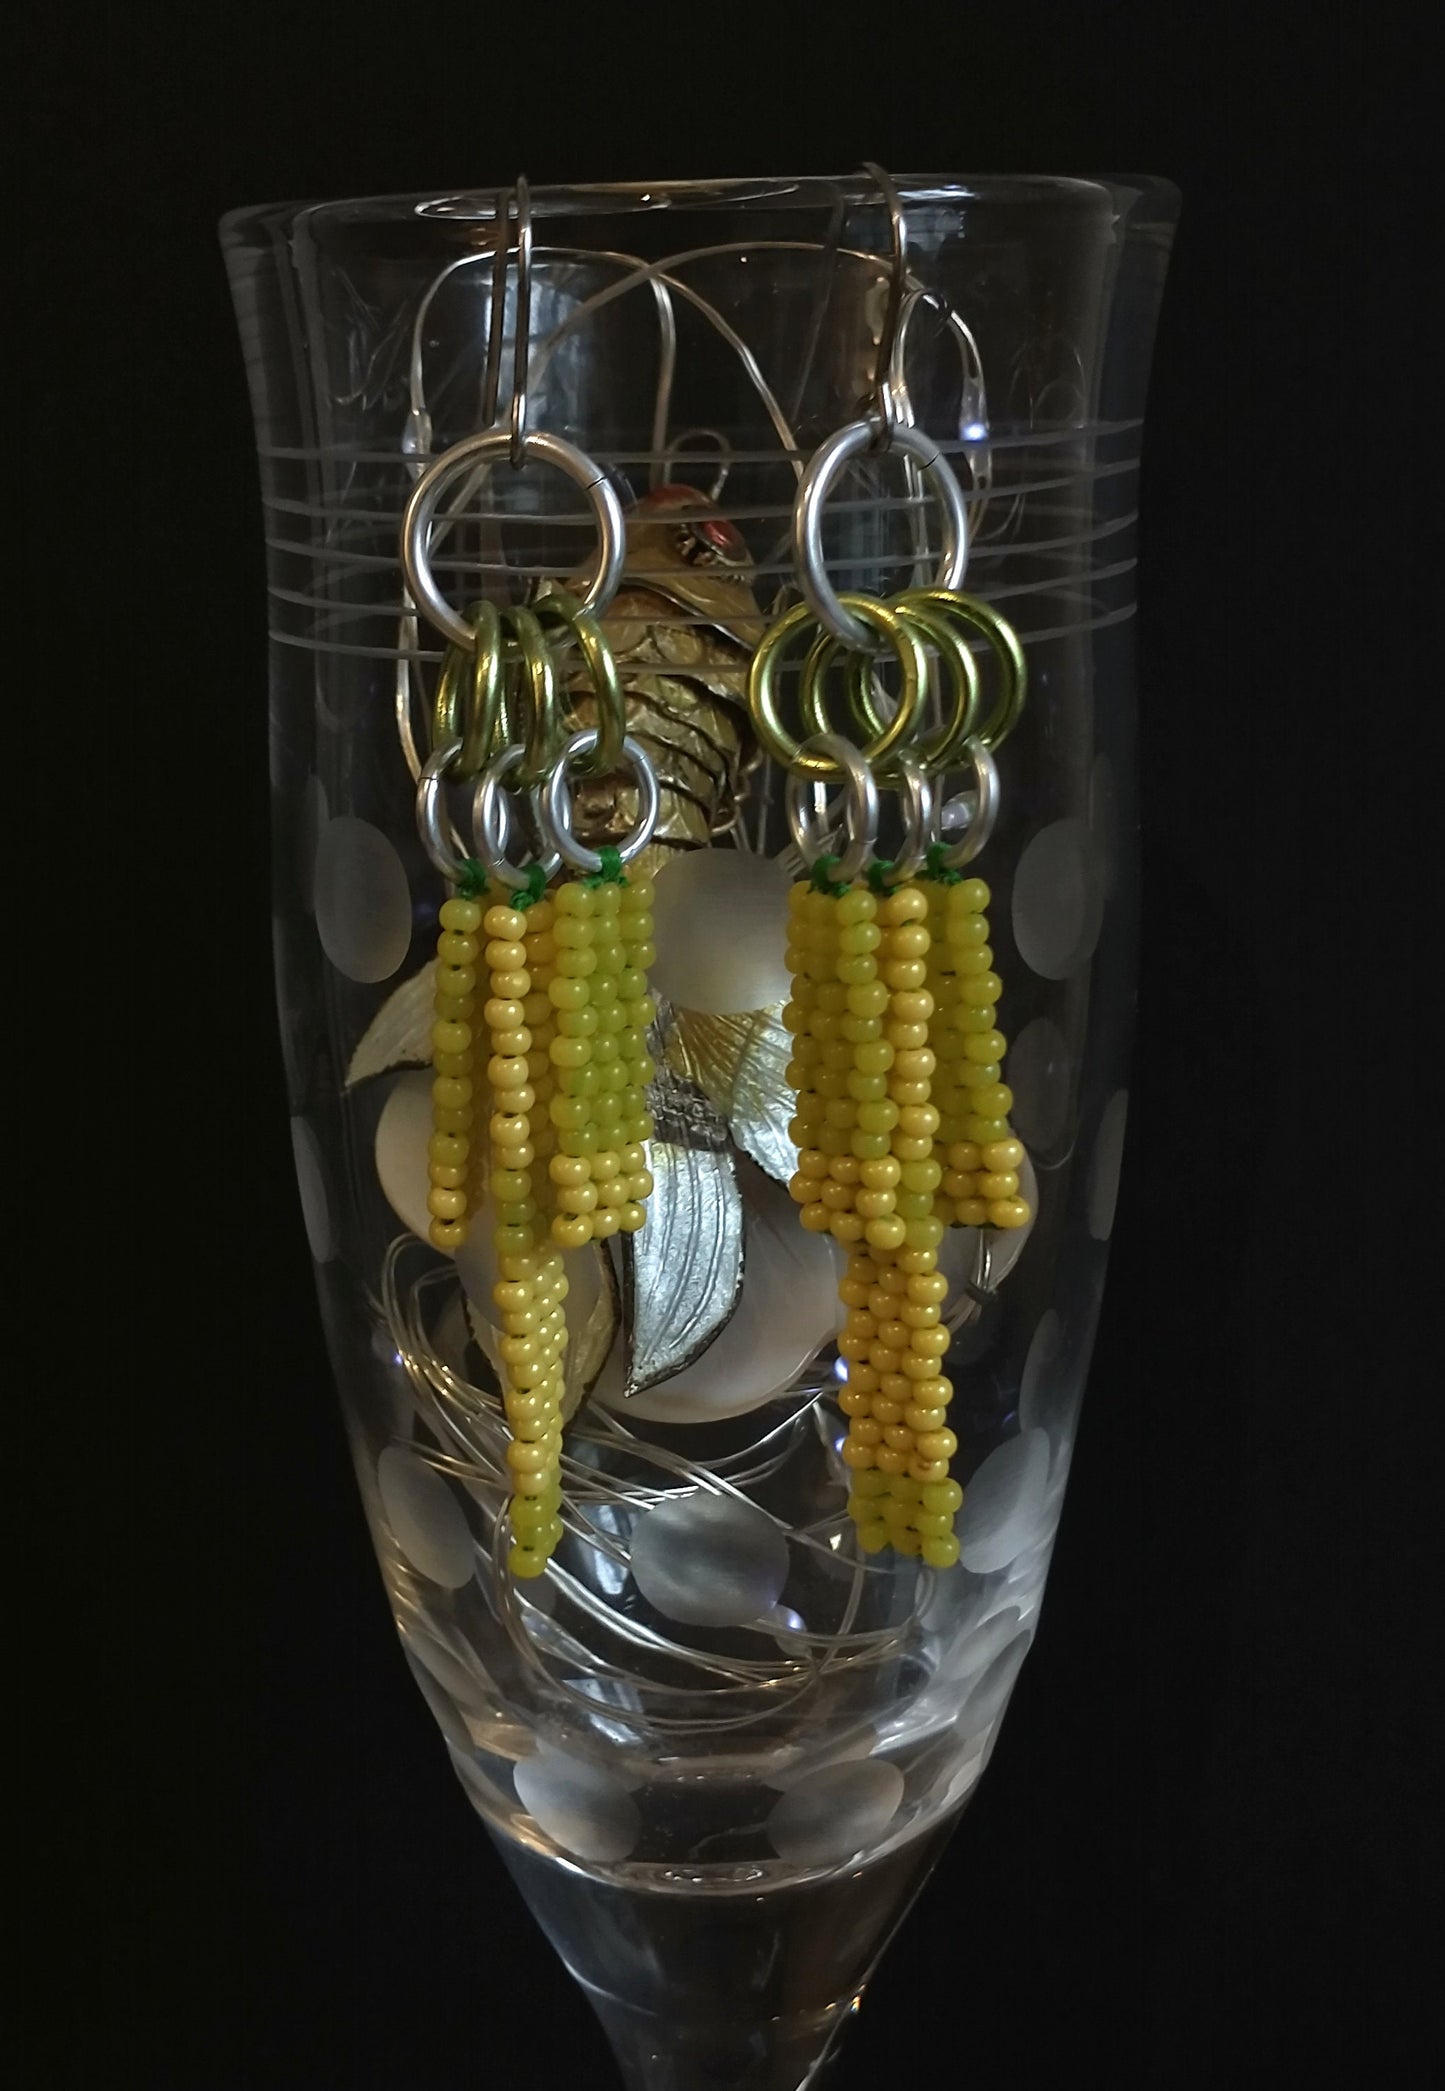 Lemon Yellow Beaded Bar Drop Earrings | Colorful Seed Bead Fringe Dangles | Handwoven Native Beadwork | Bohemian Chic Jewelry | PNW Gift